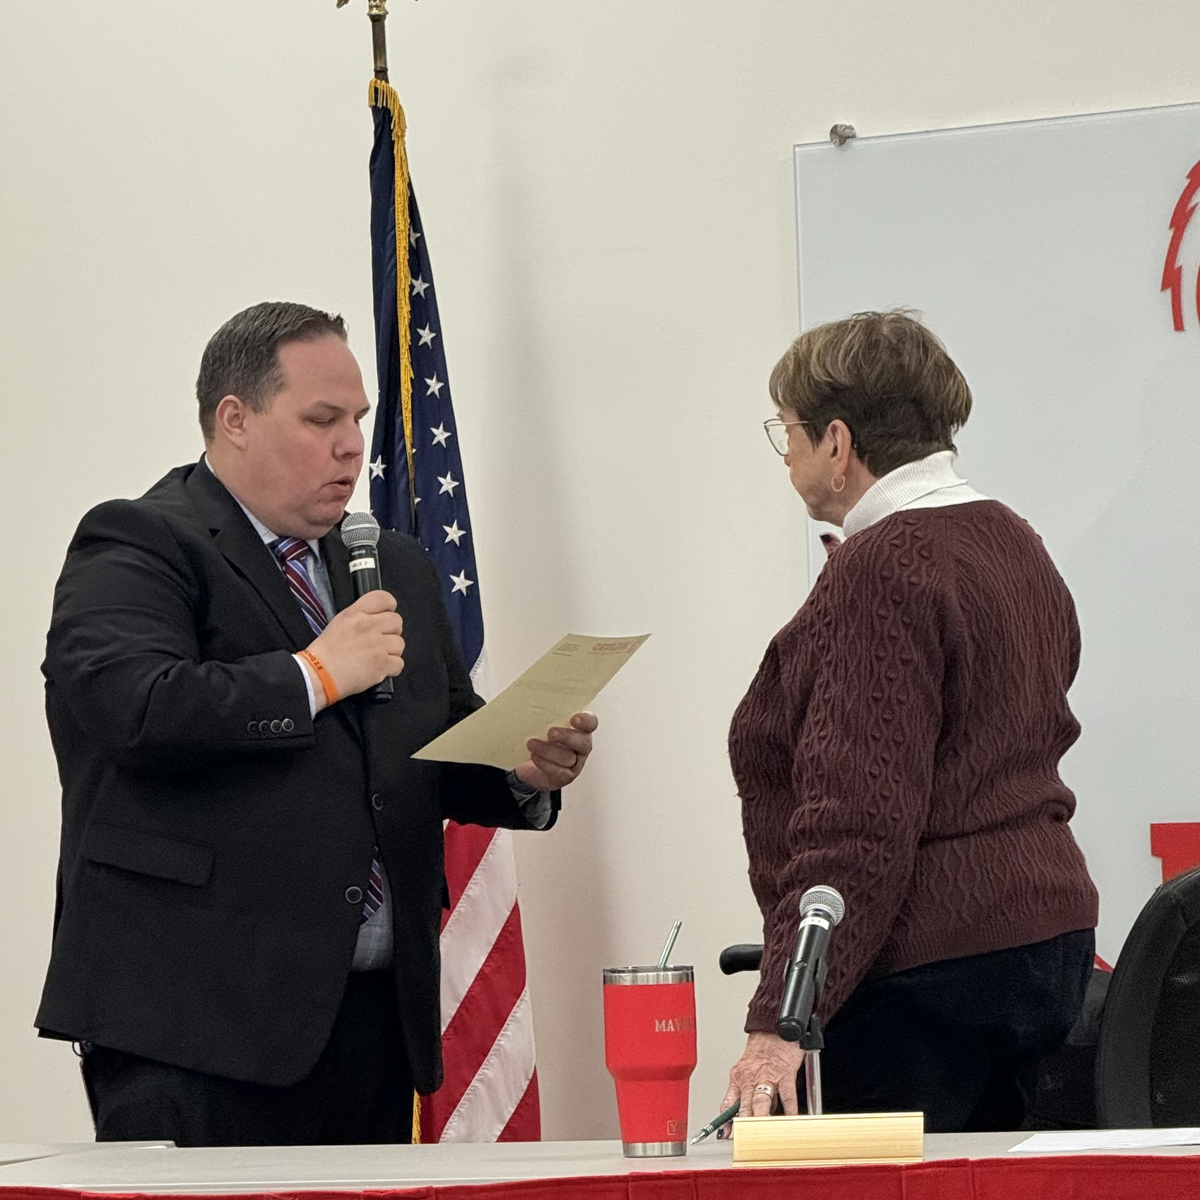 Mary Ann Will Sworn in as Newest Board Member